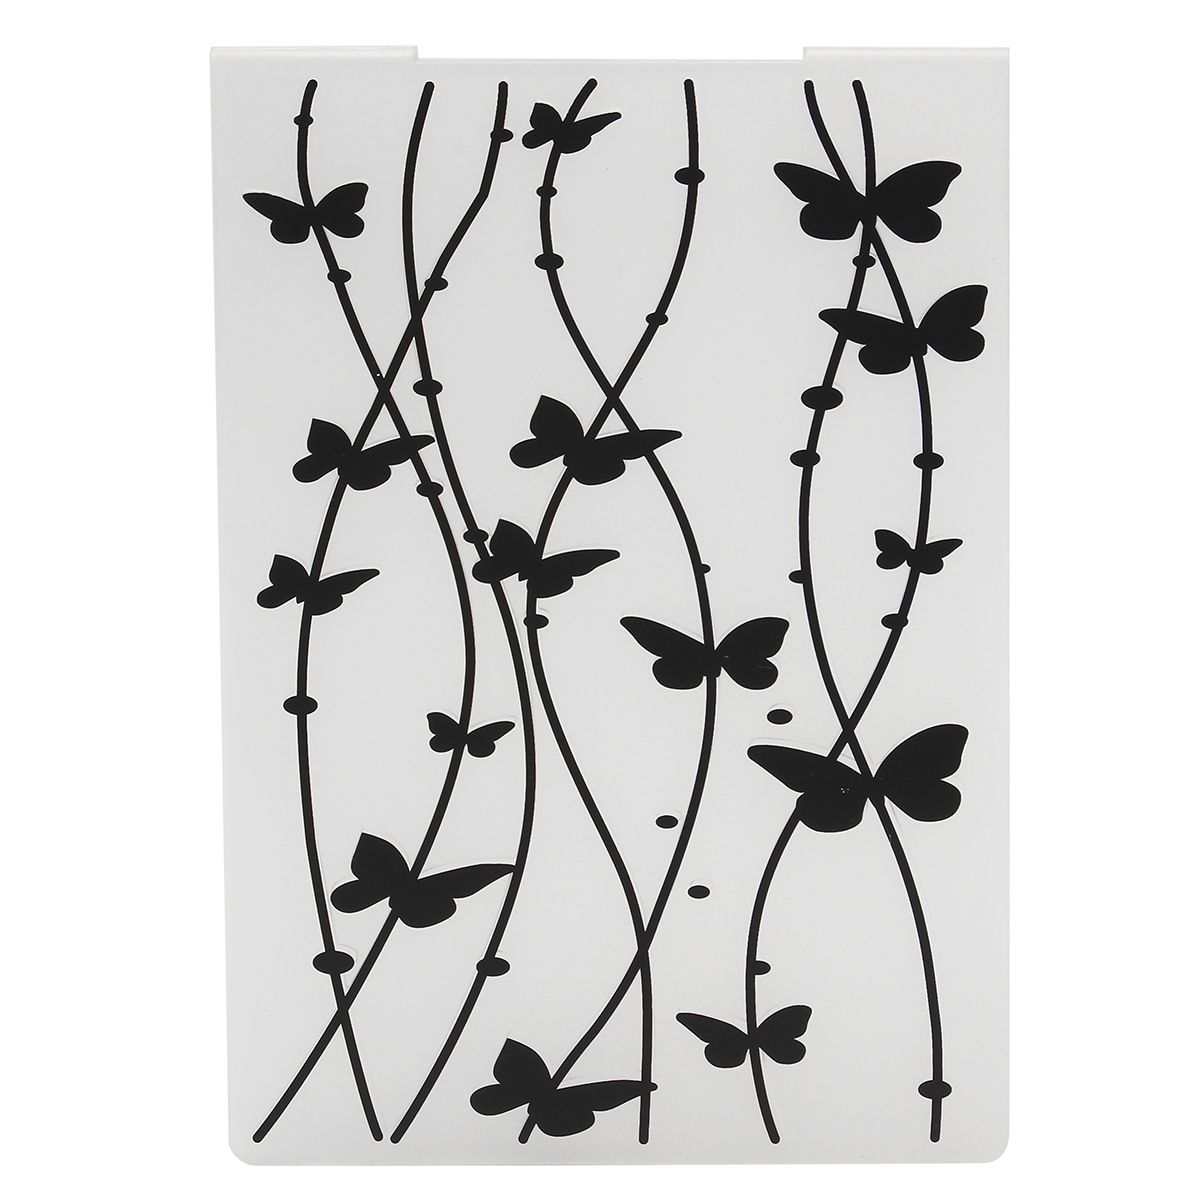 Plastic-Butterfly-Vine-Embossing-Folder-Template-Scrapbooking-Paper-Craft-Decor-Cutting-Dies-10x15cm-1147908